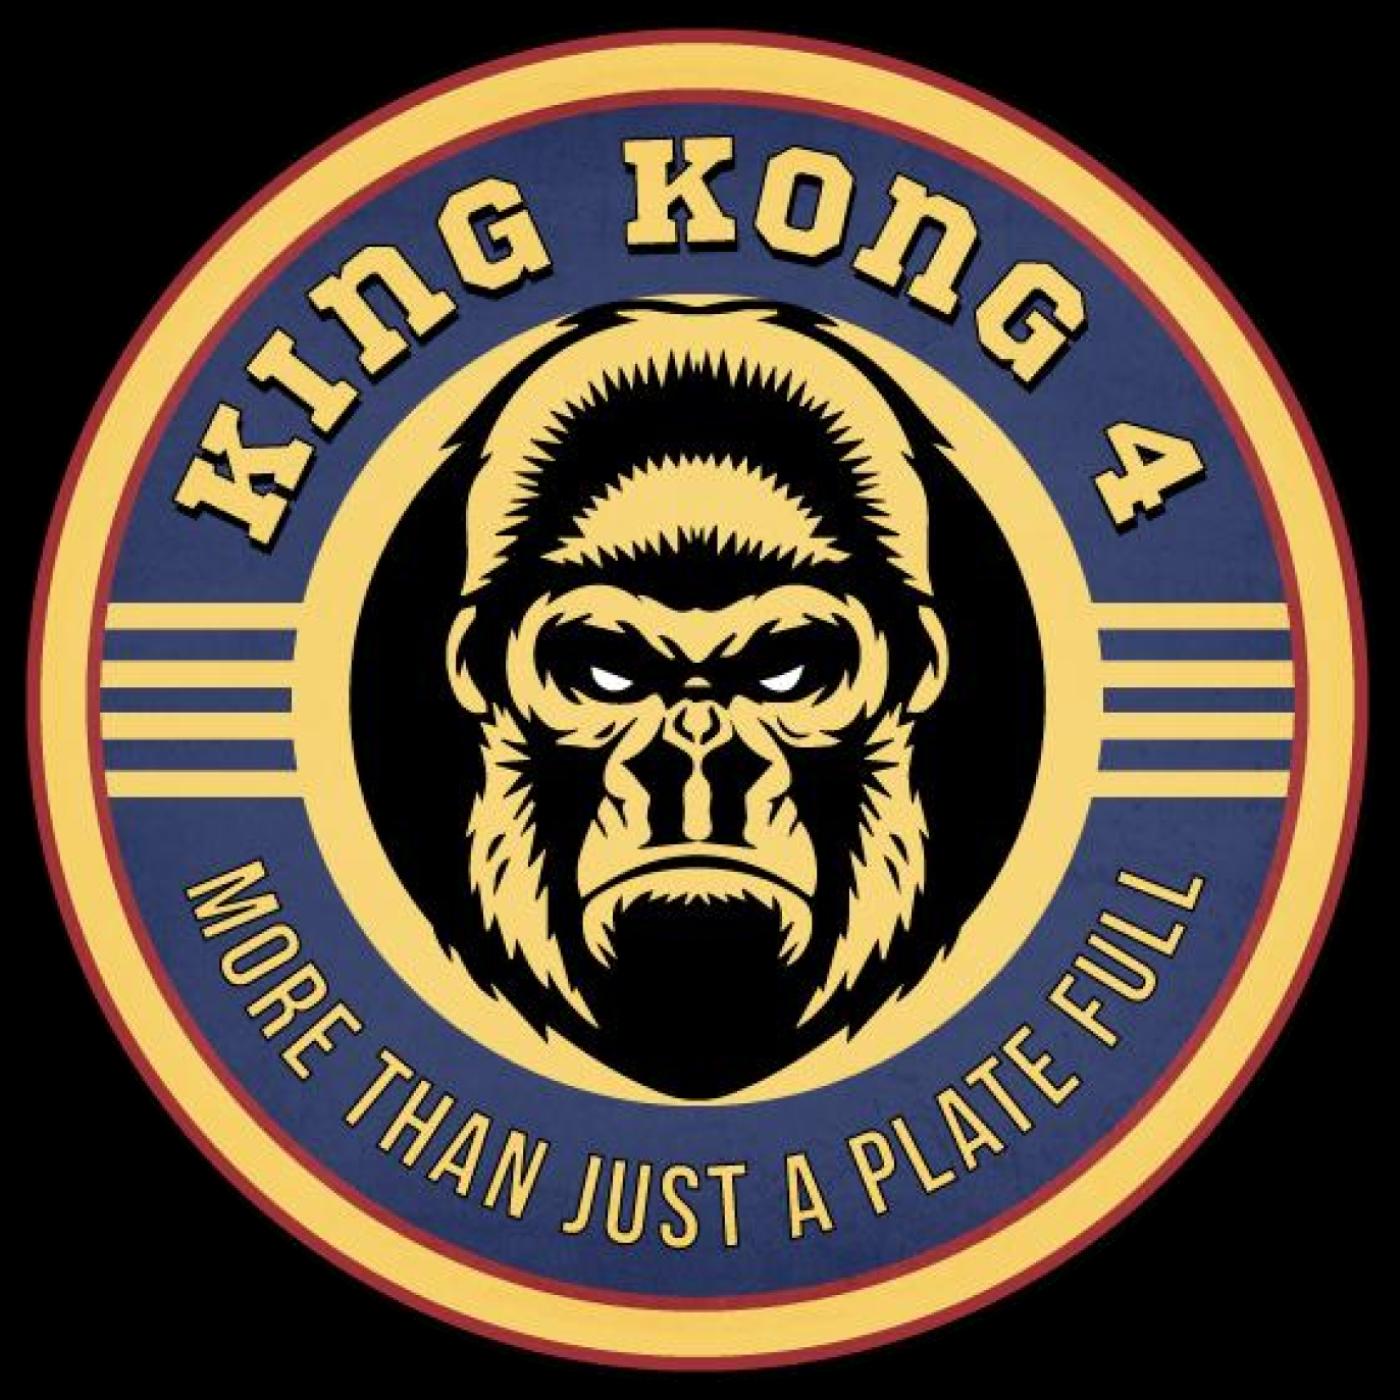 King kong 4. Нашивка Кинг Конг Компани. Кинг Конг паб. Кинг Конг повар Джексон.